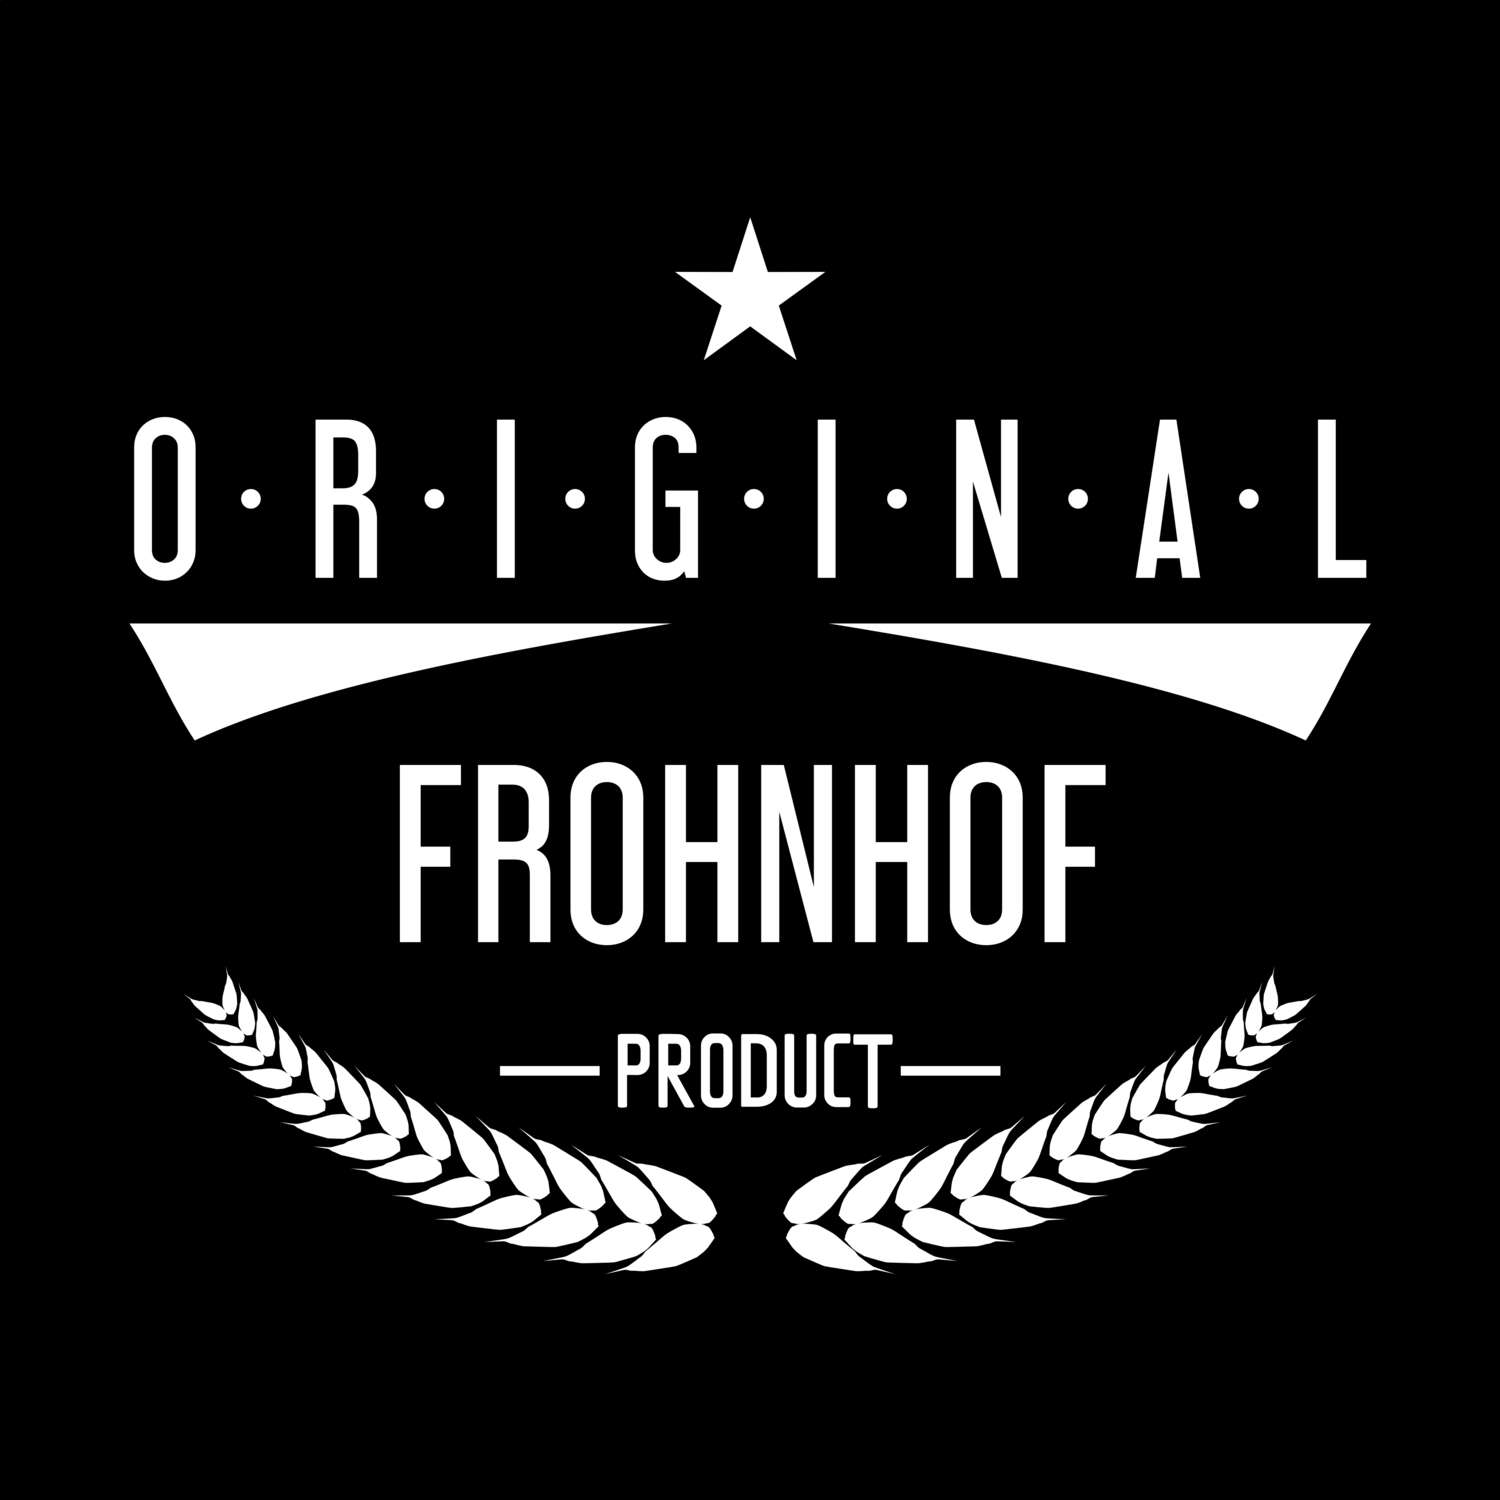 Frohnhof T-Shirt »Original Product«